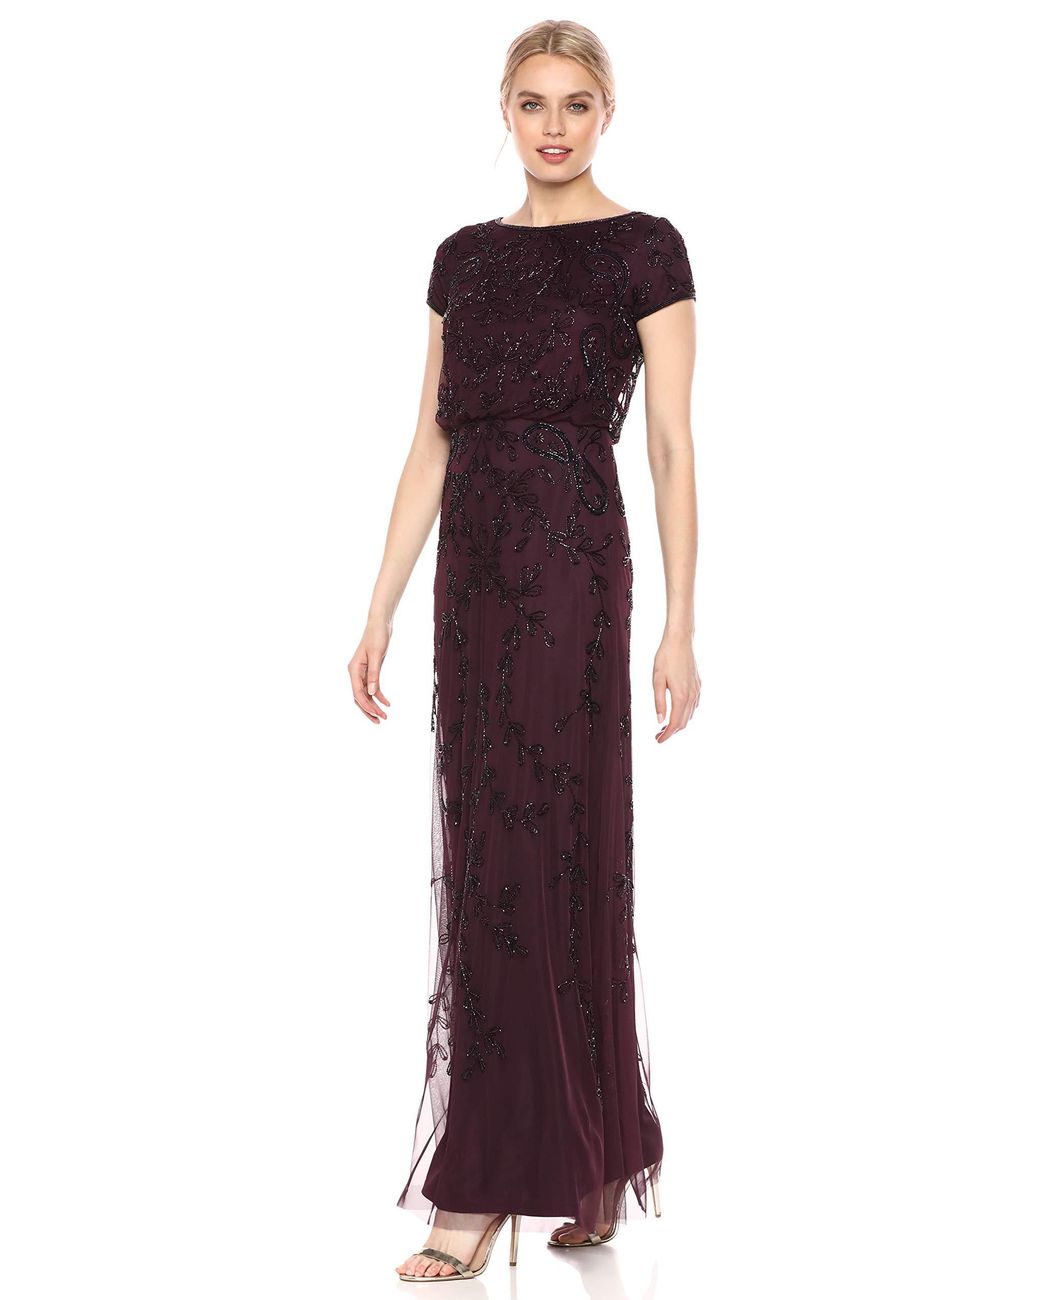 Adrianna Papell Long Beaded Dress in Night Plum (Purple) - Save 15% - Lyst